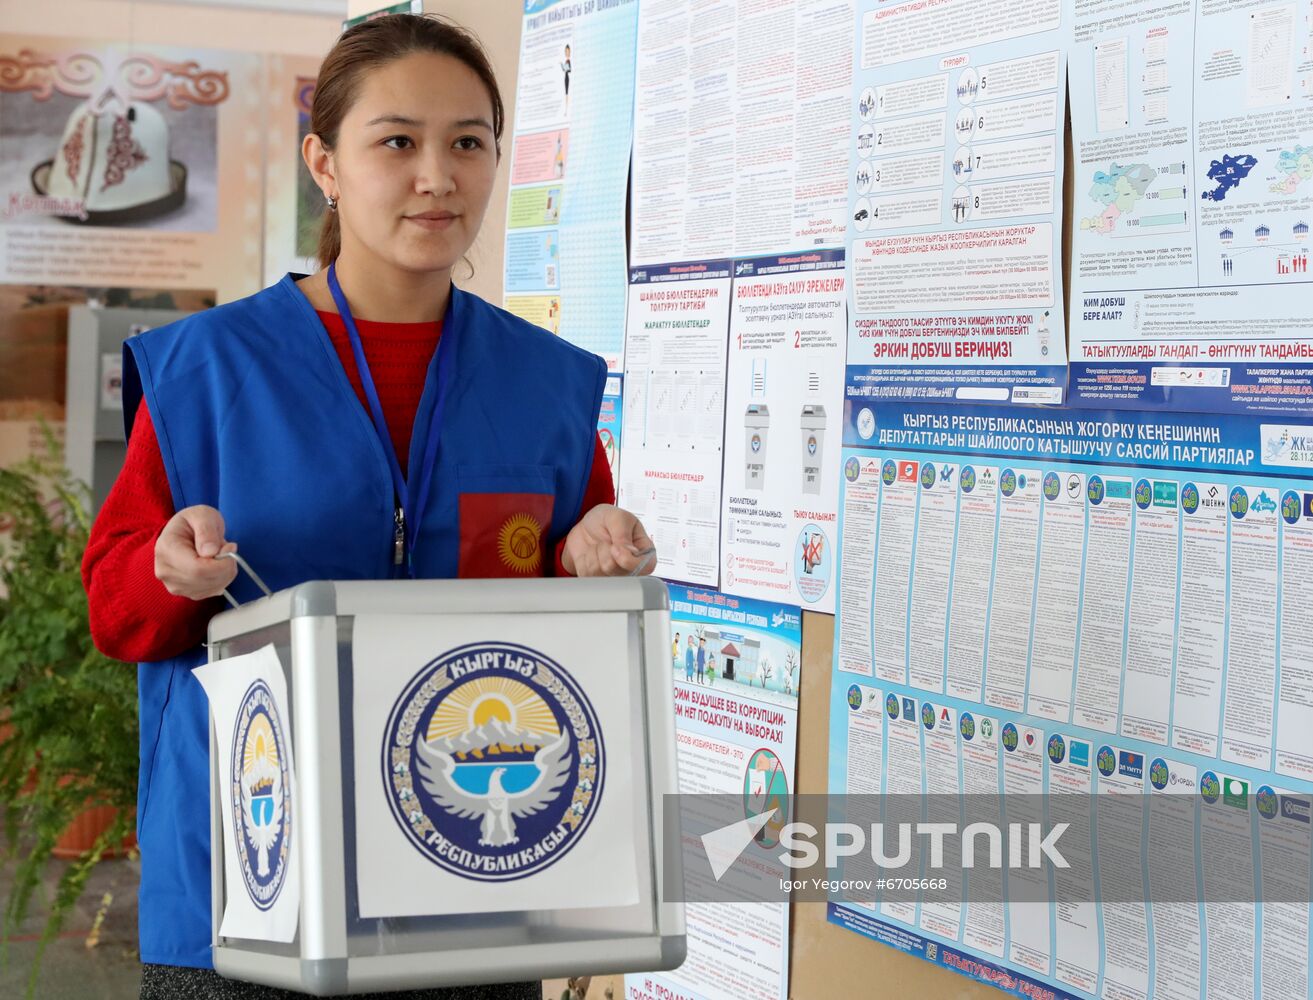 Kyrgyzstan Parliamentaly Elections Preparations